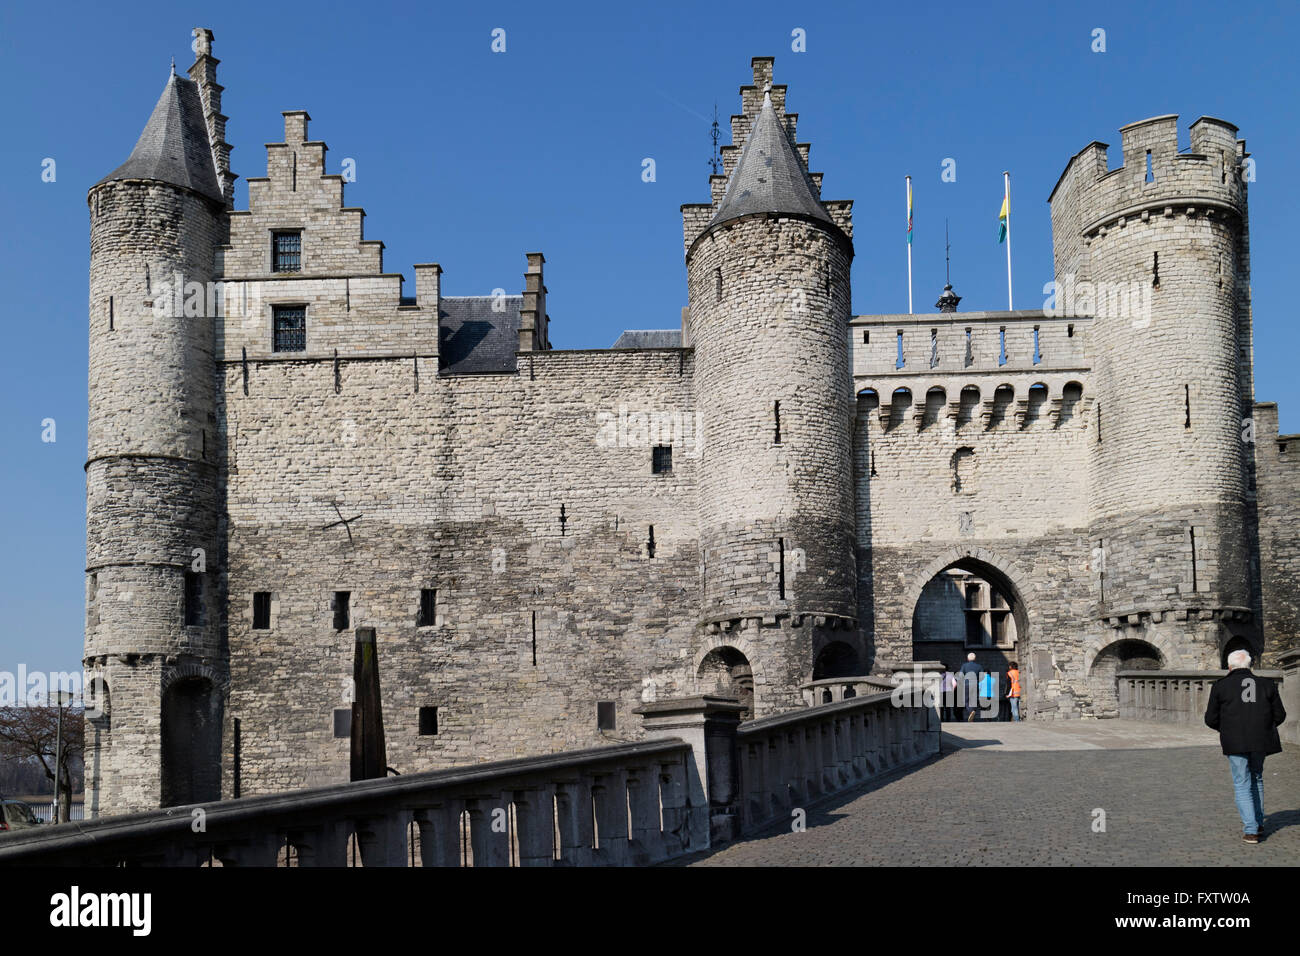 Entrance gate to the Steen Castle on banks of Schelde river in Antwerp, Belgium Stock Photo